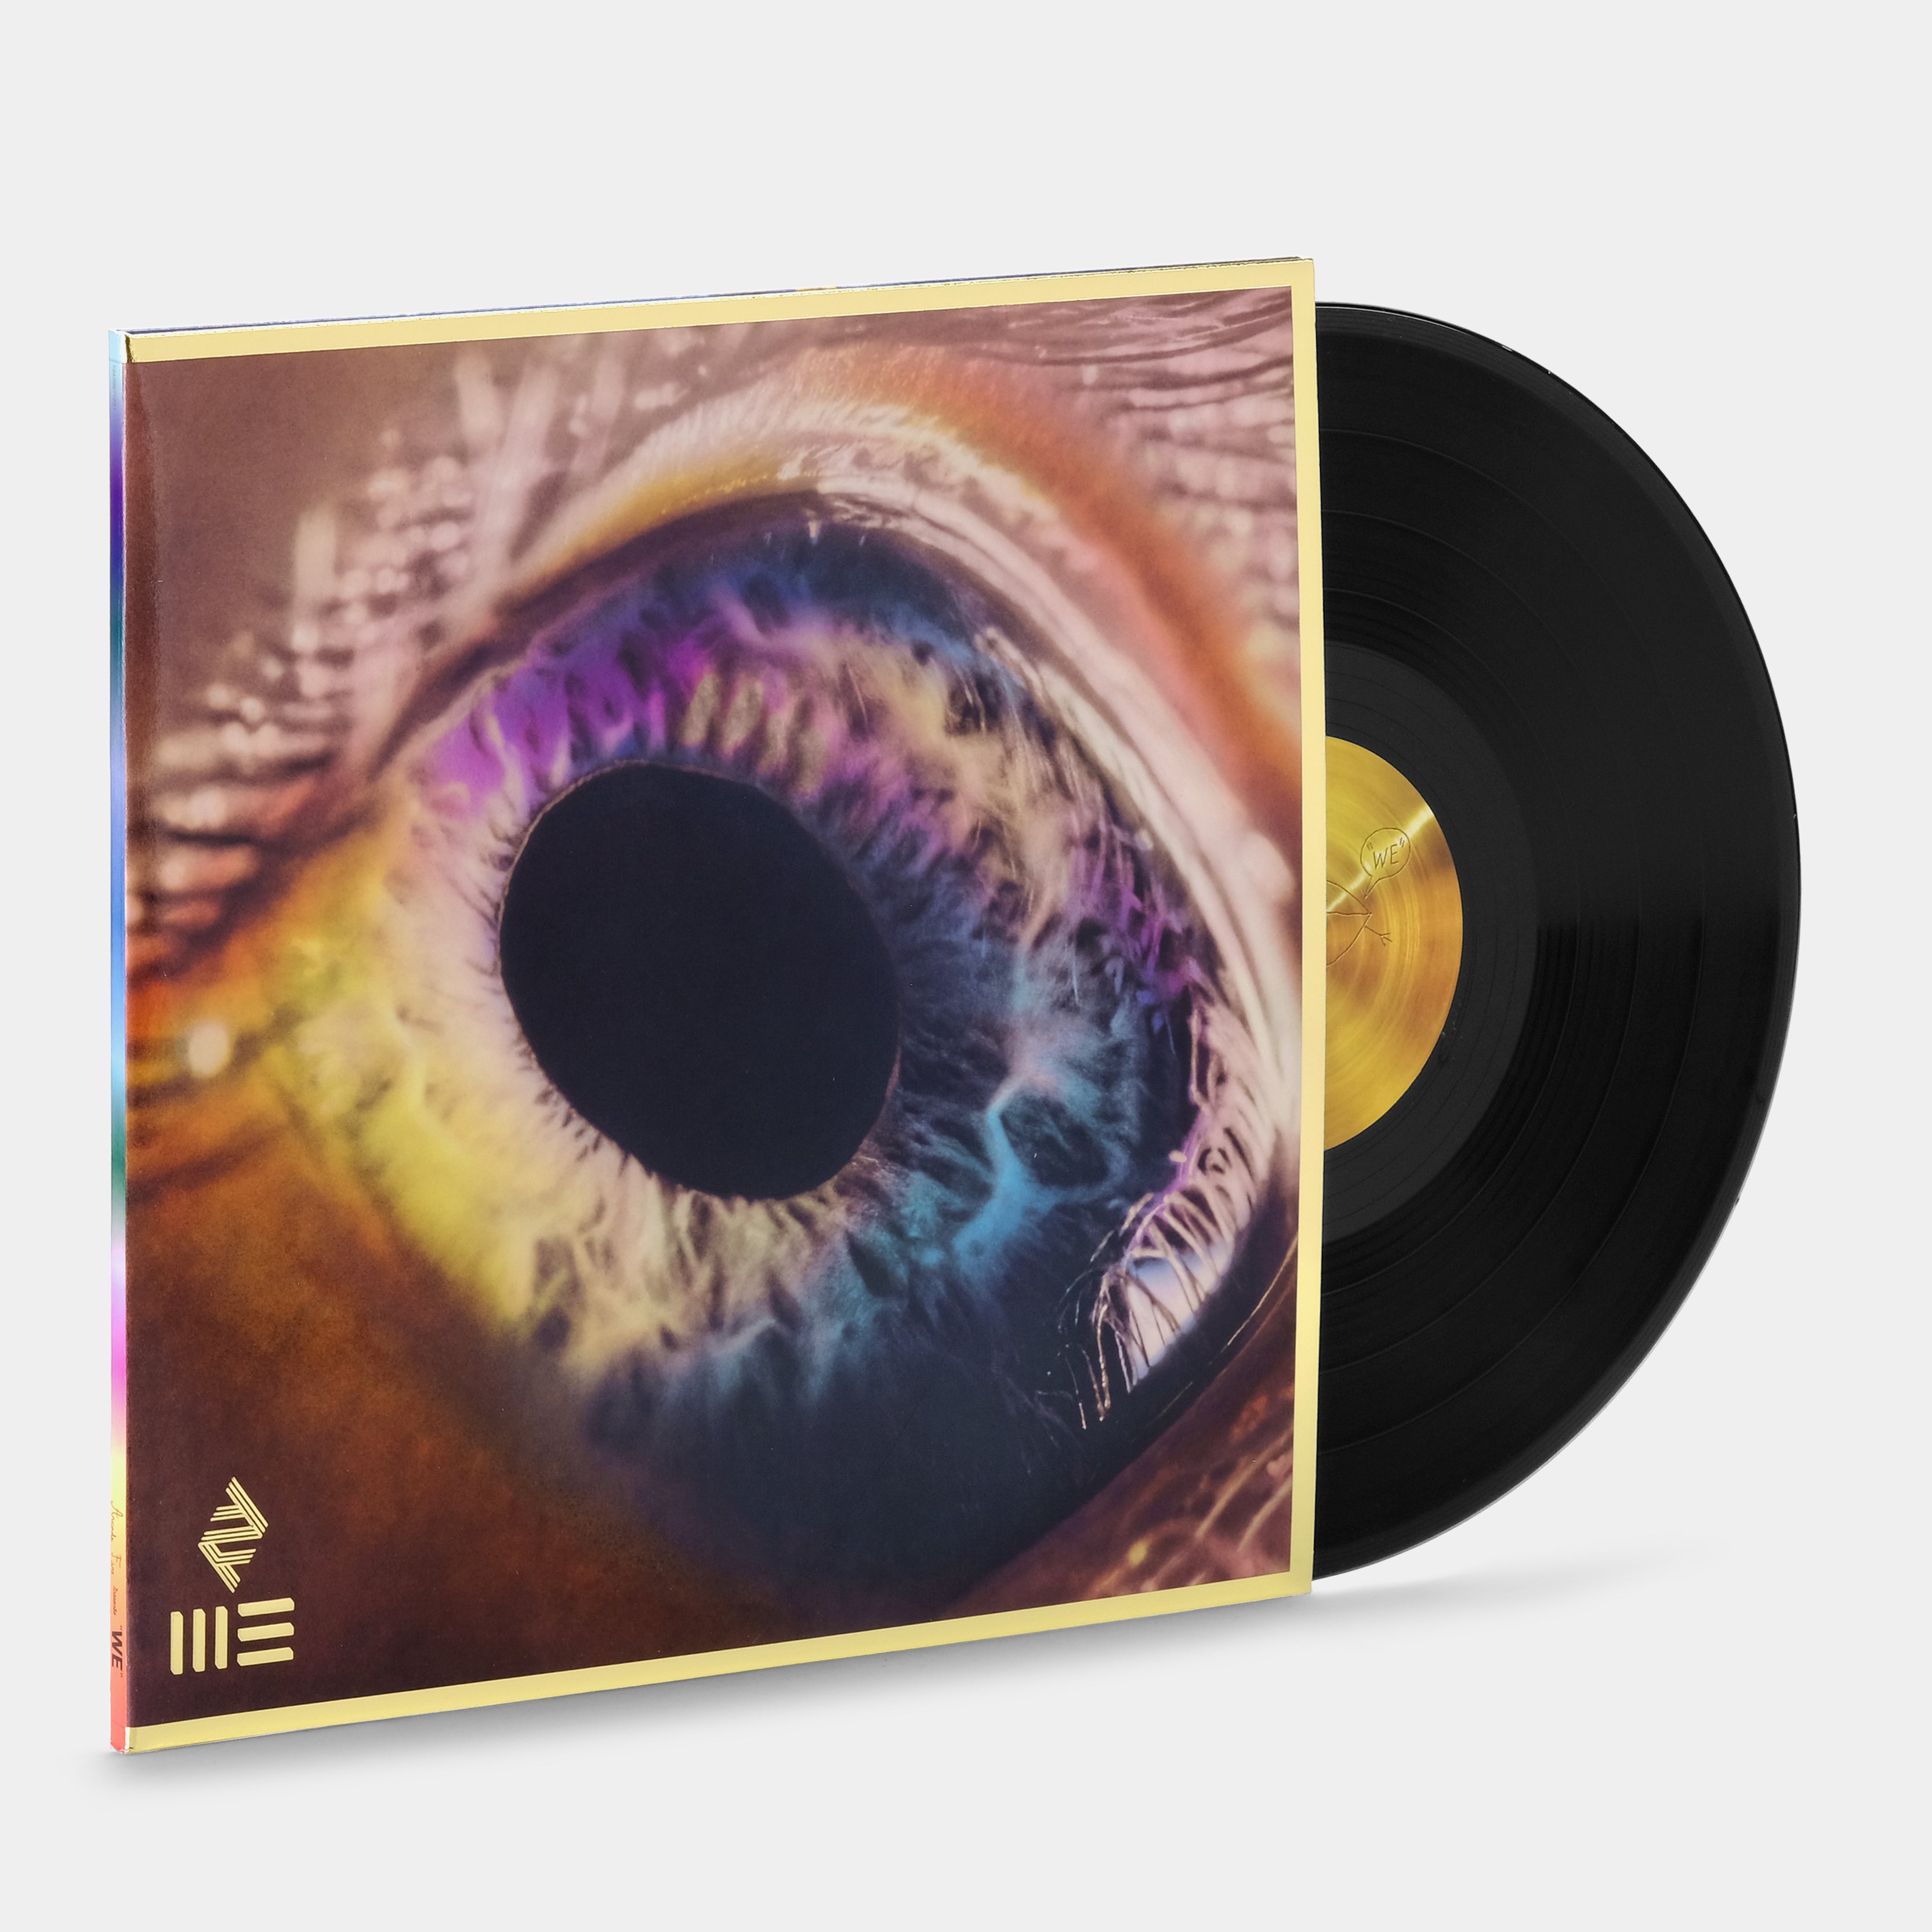 Arcade Fire - We LP Vinyl Record